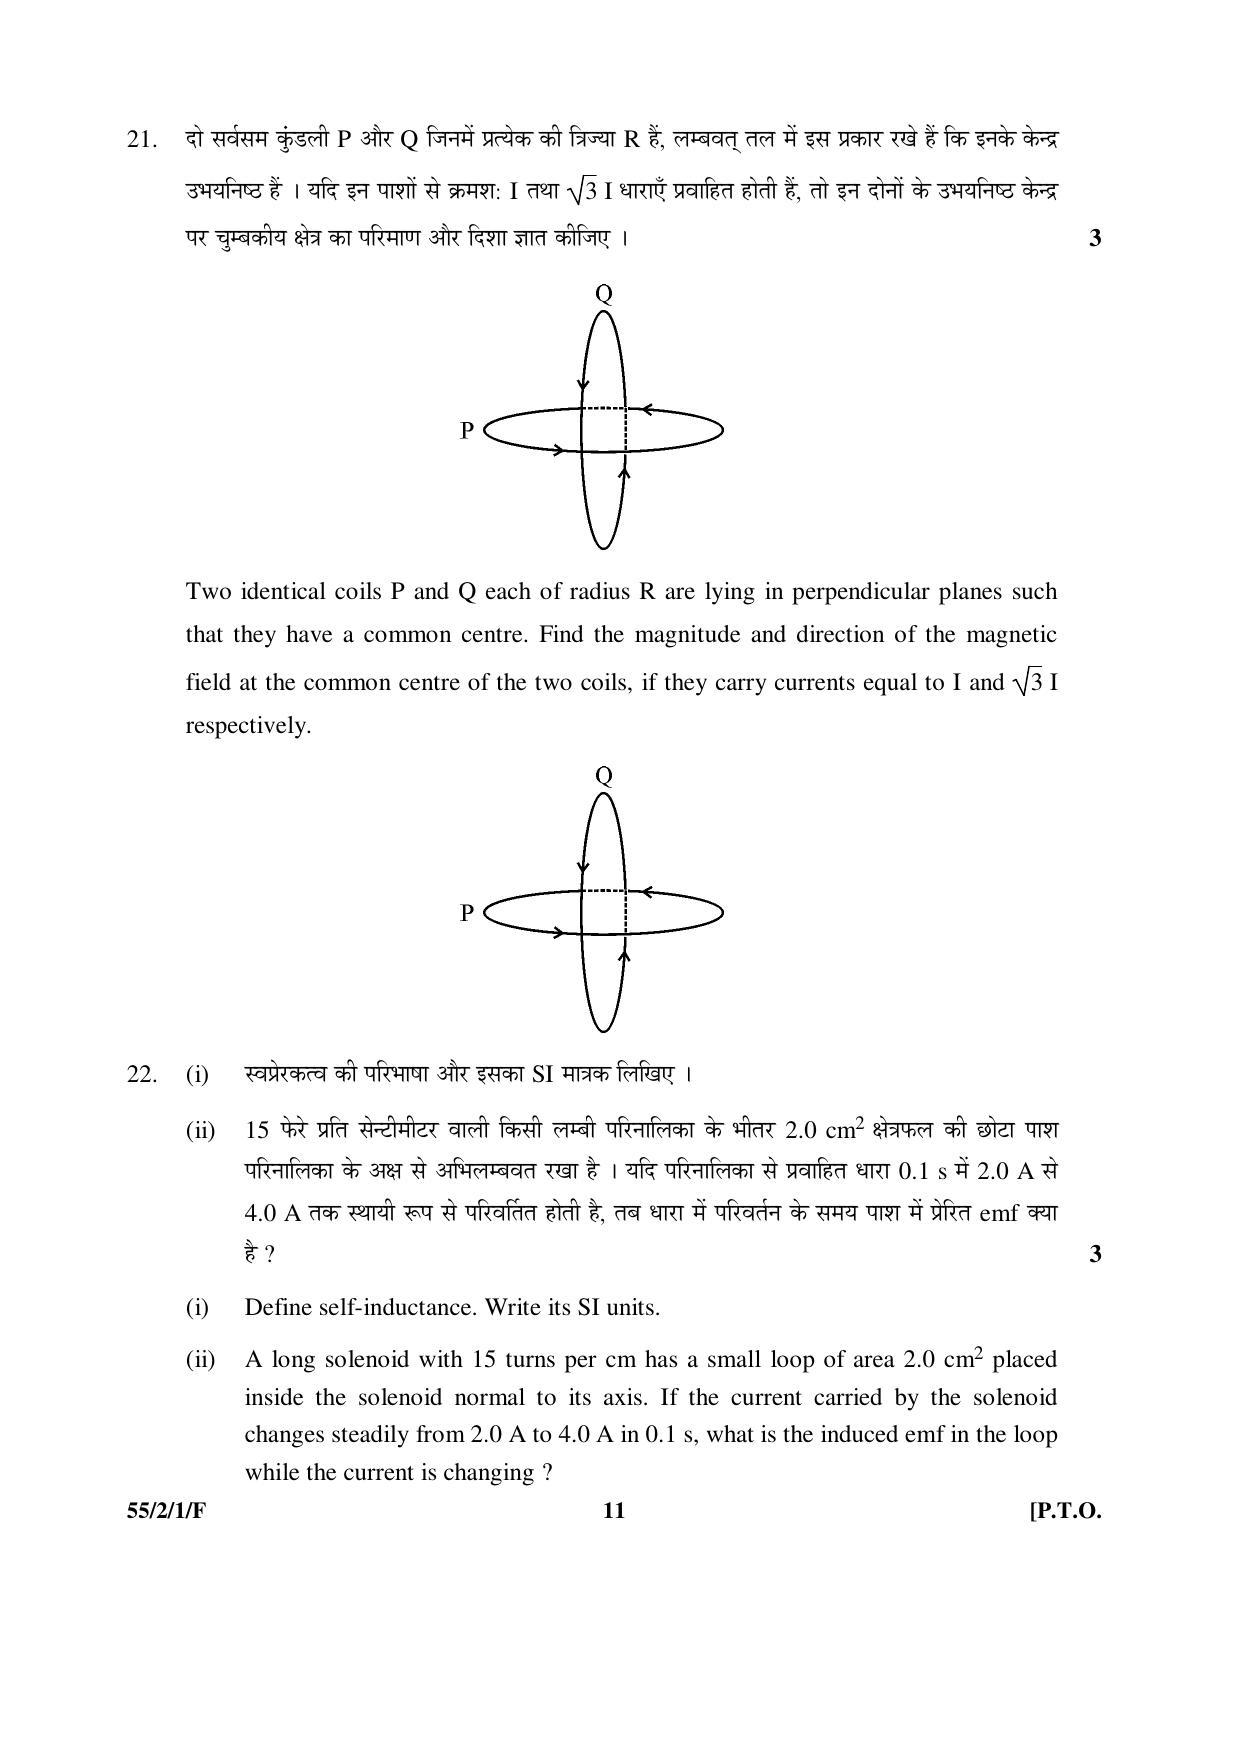 CBSE Class 12 55-2-1-F _Physics_SET-1 2016 Question Paper - Page 11